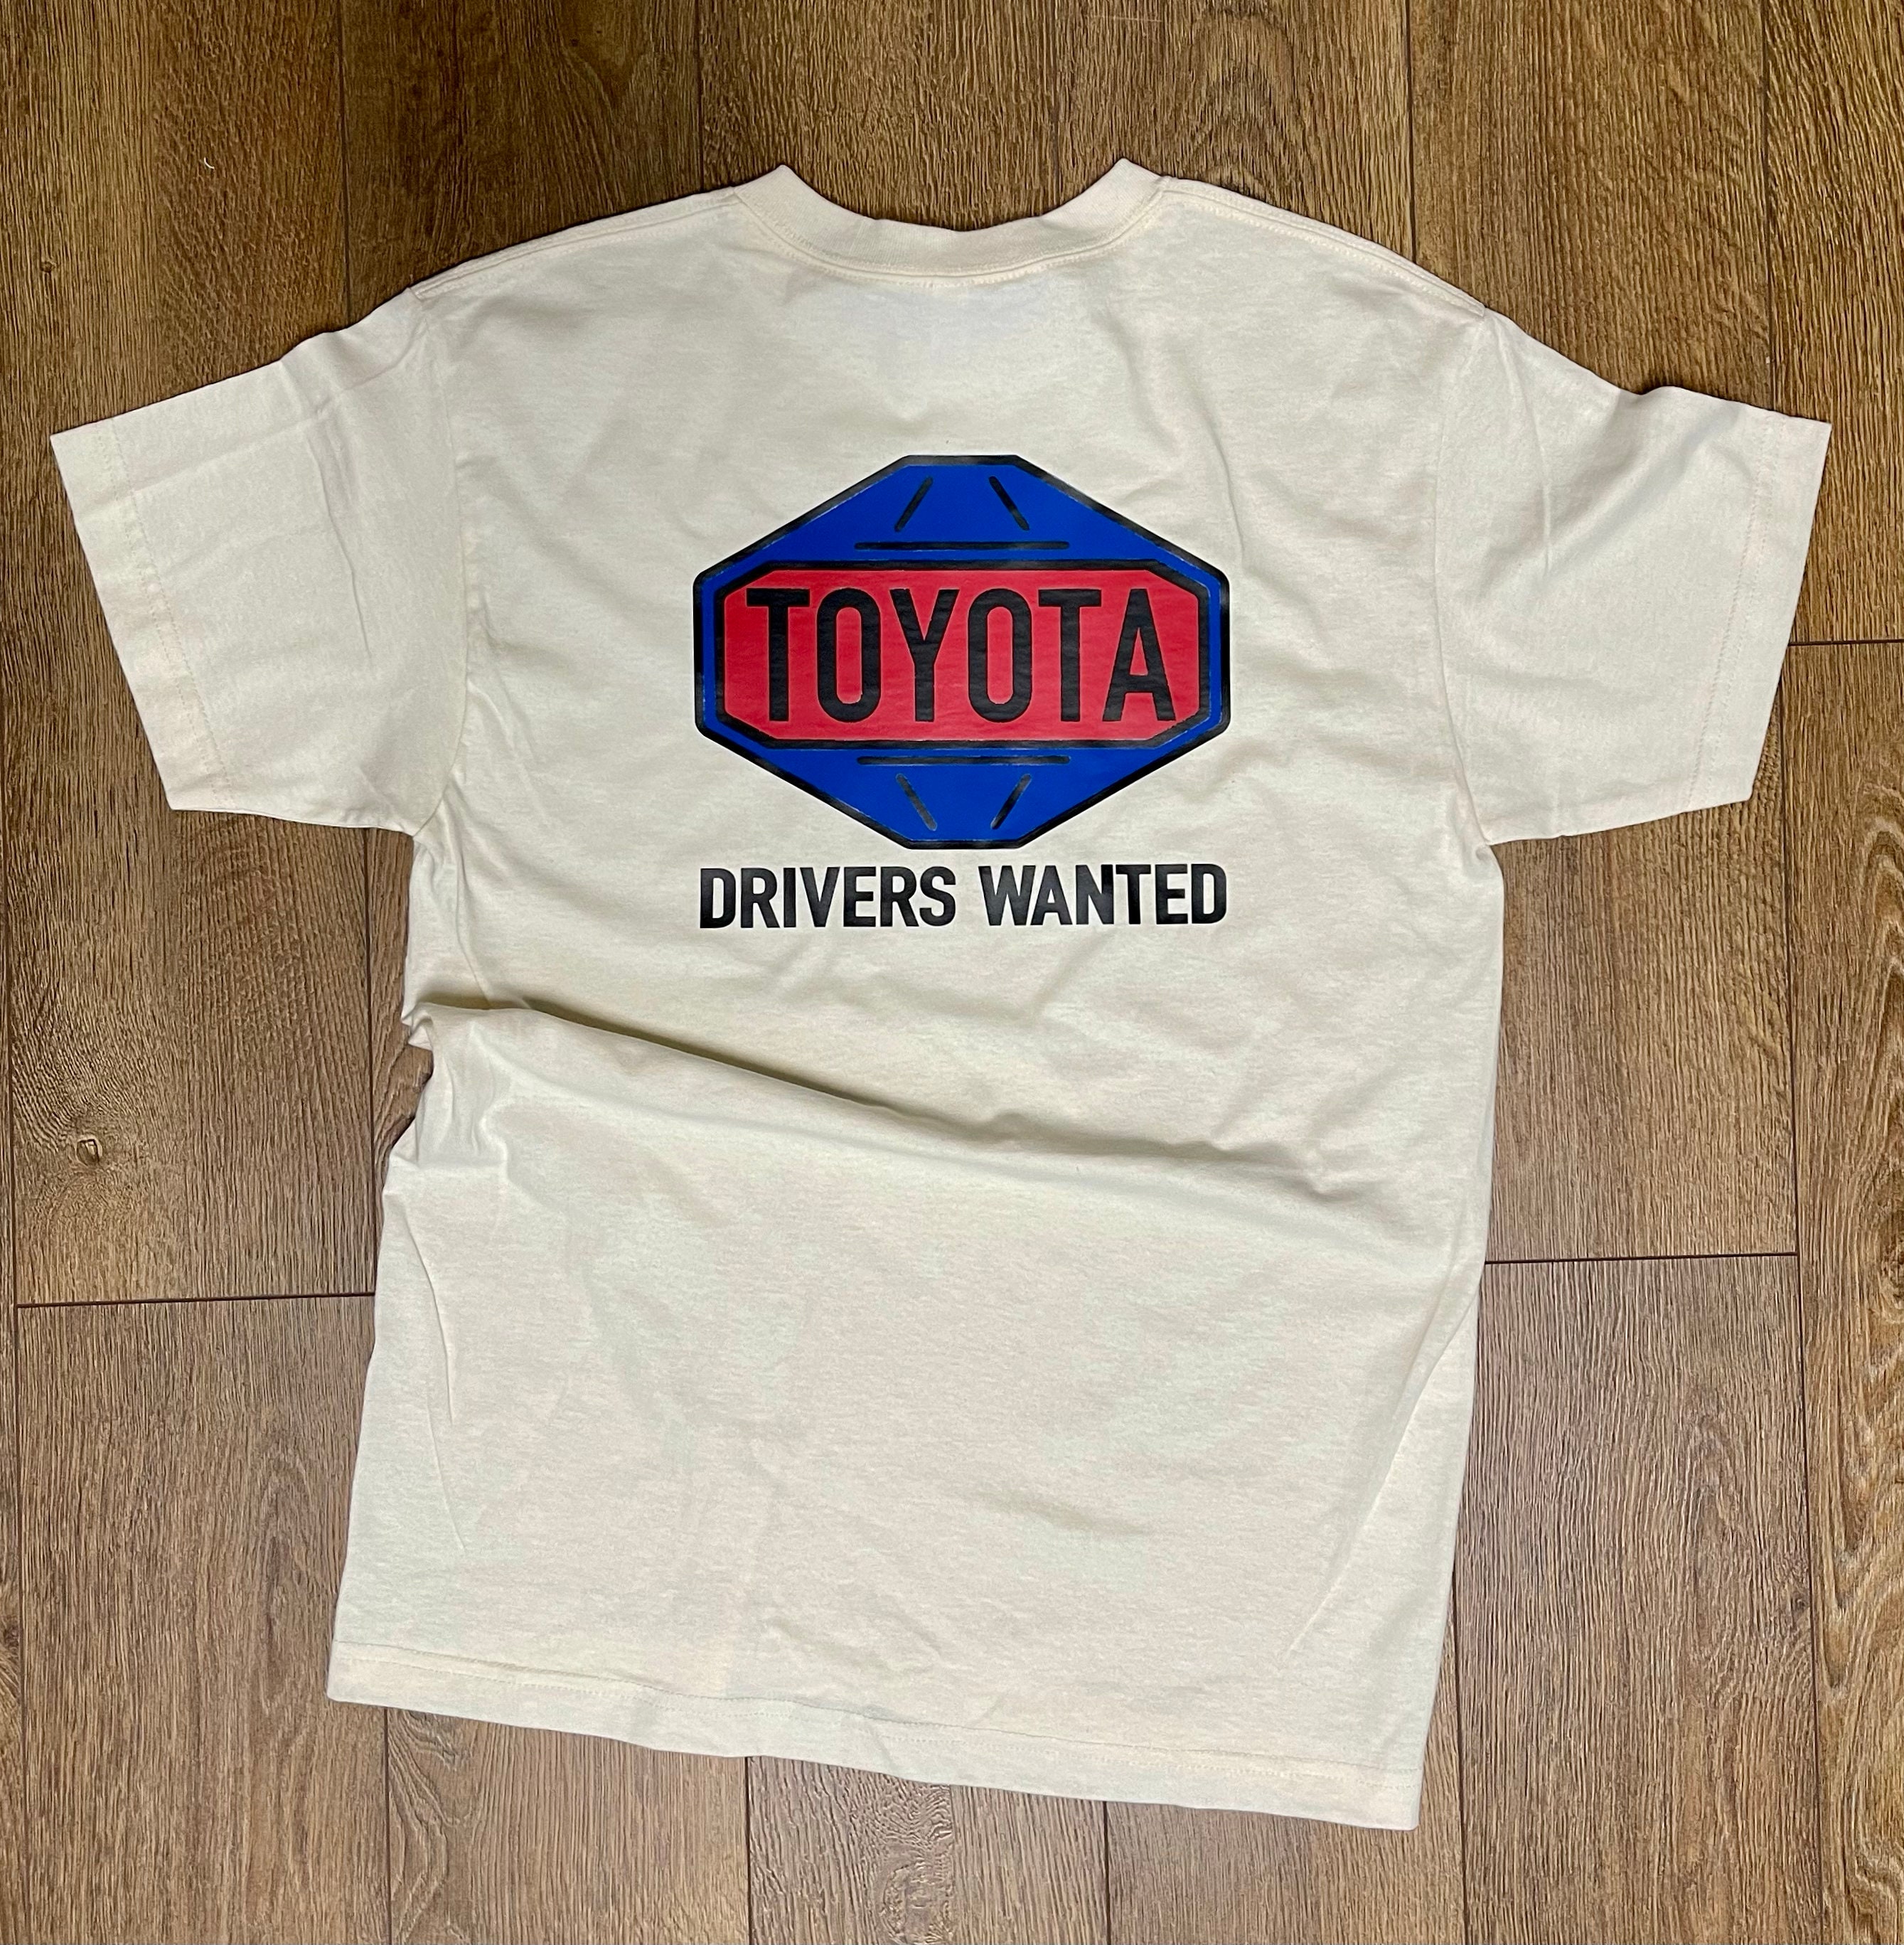 Old School Toyota T-shirt 